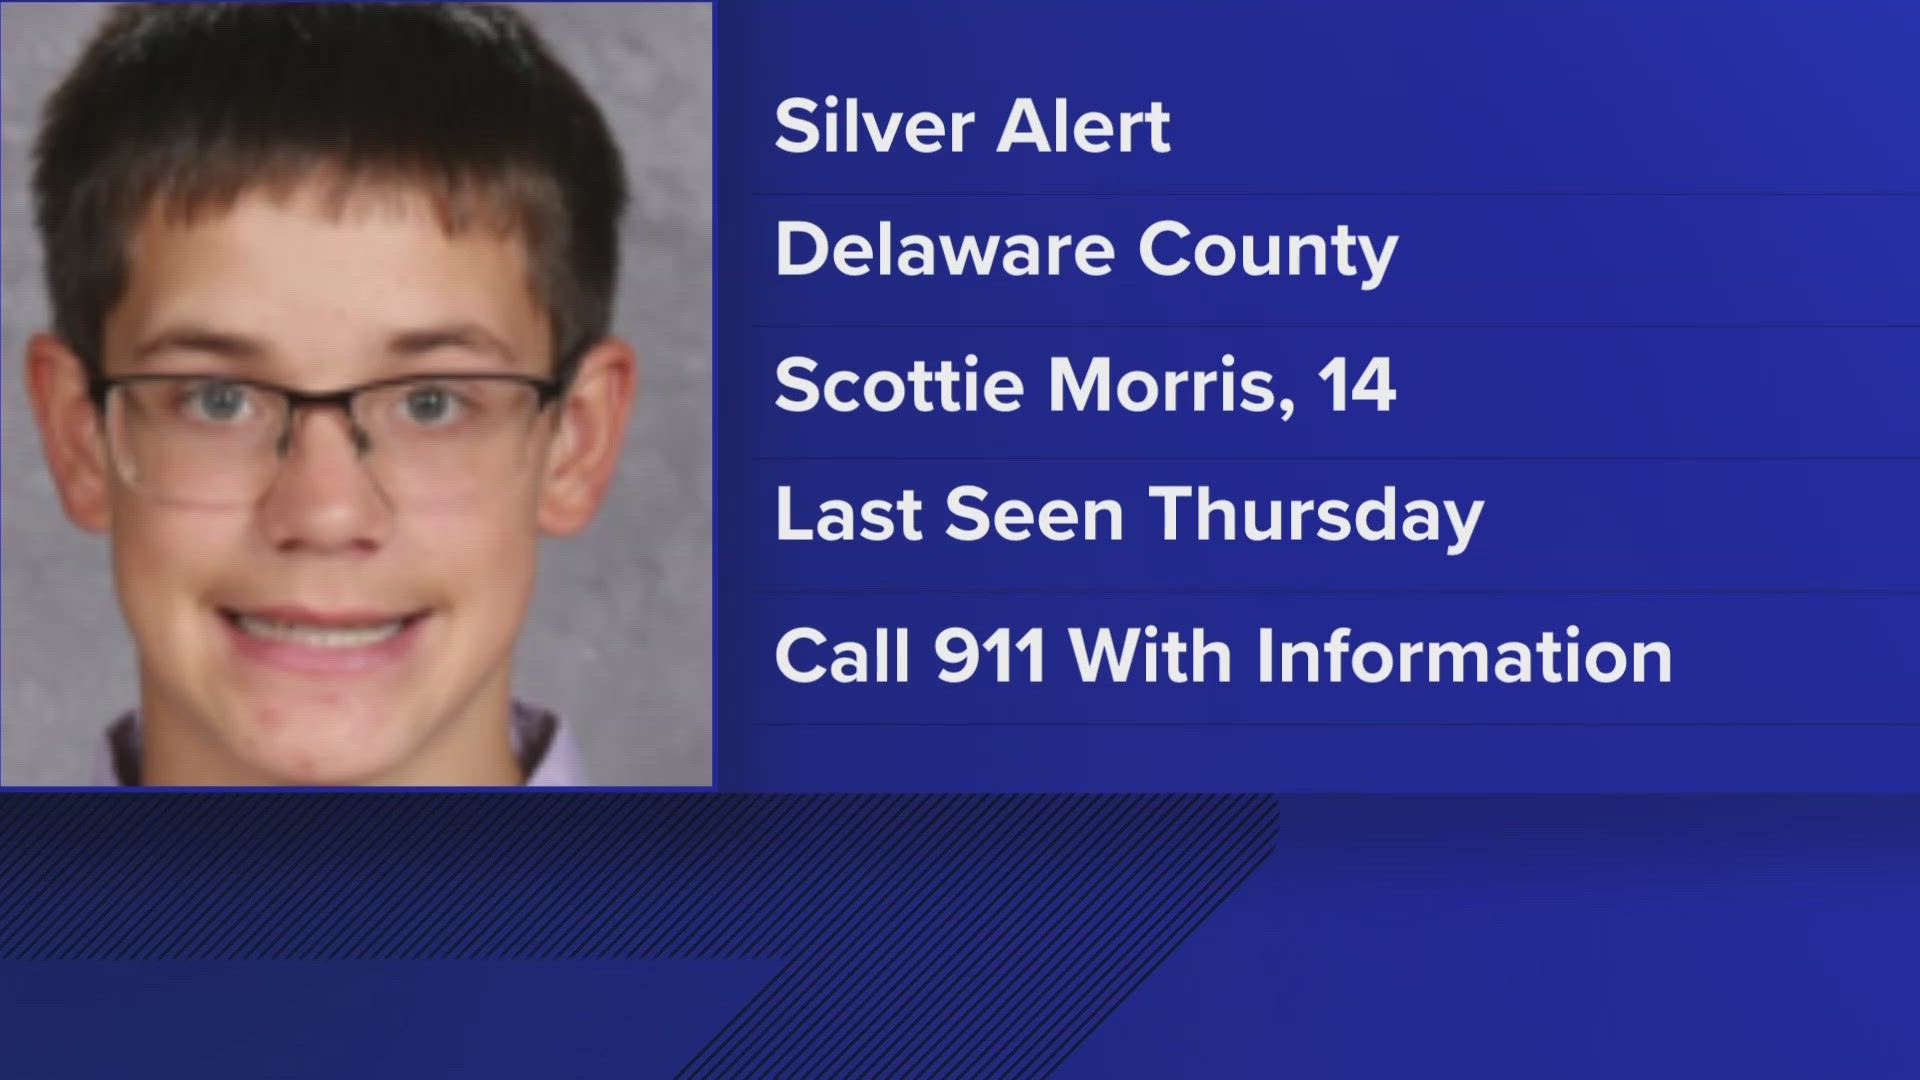 Scottie Morris, 14, was last seen on Thursday.